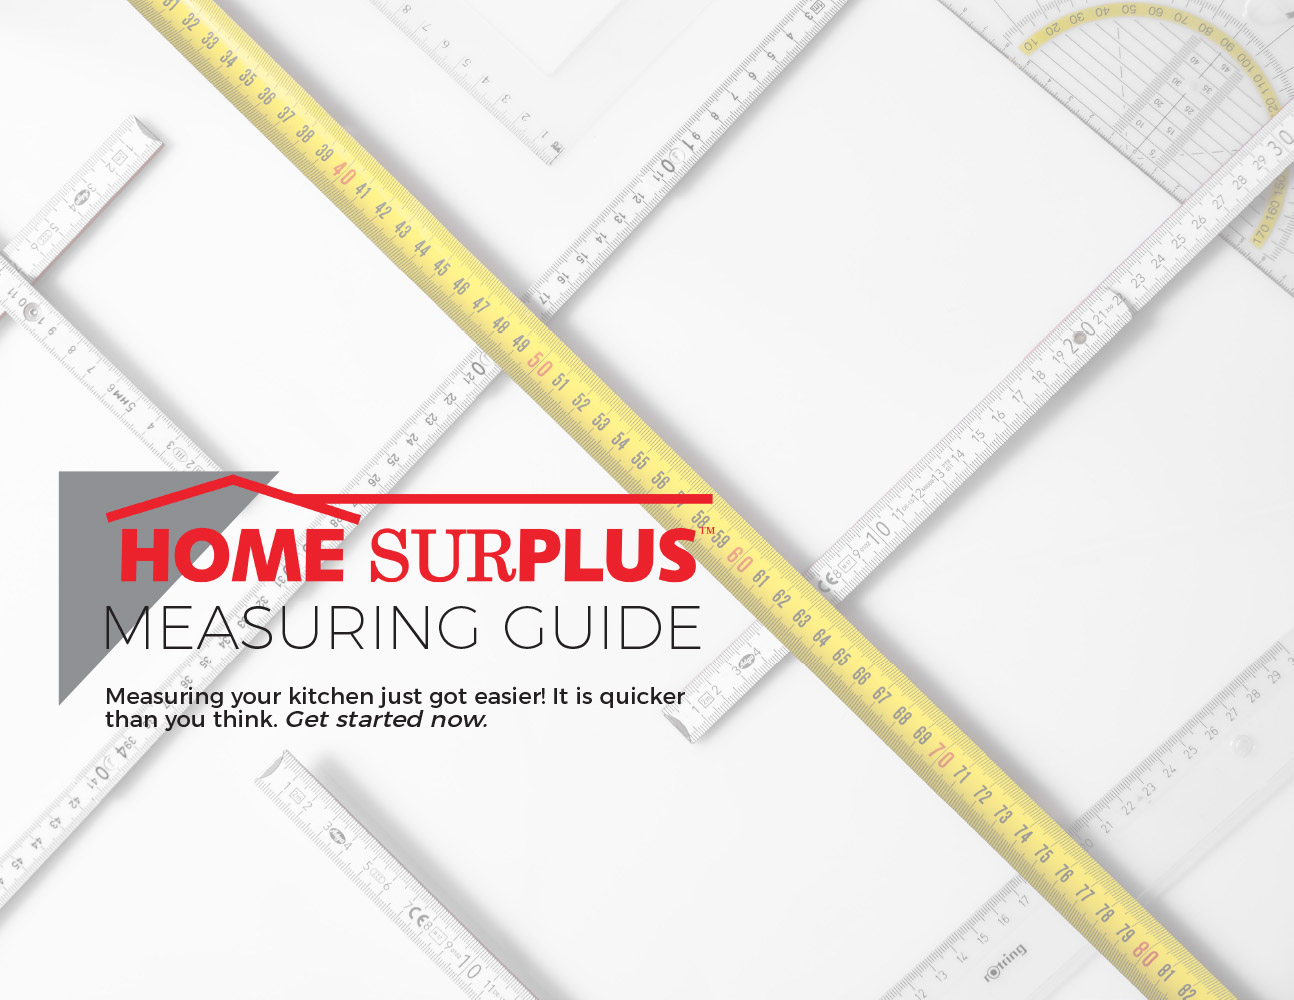 https://www.homesurplus.com/wp-content/uploads/2019/01/Measuring-Guide-1.jpg